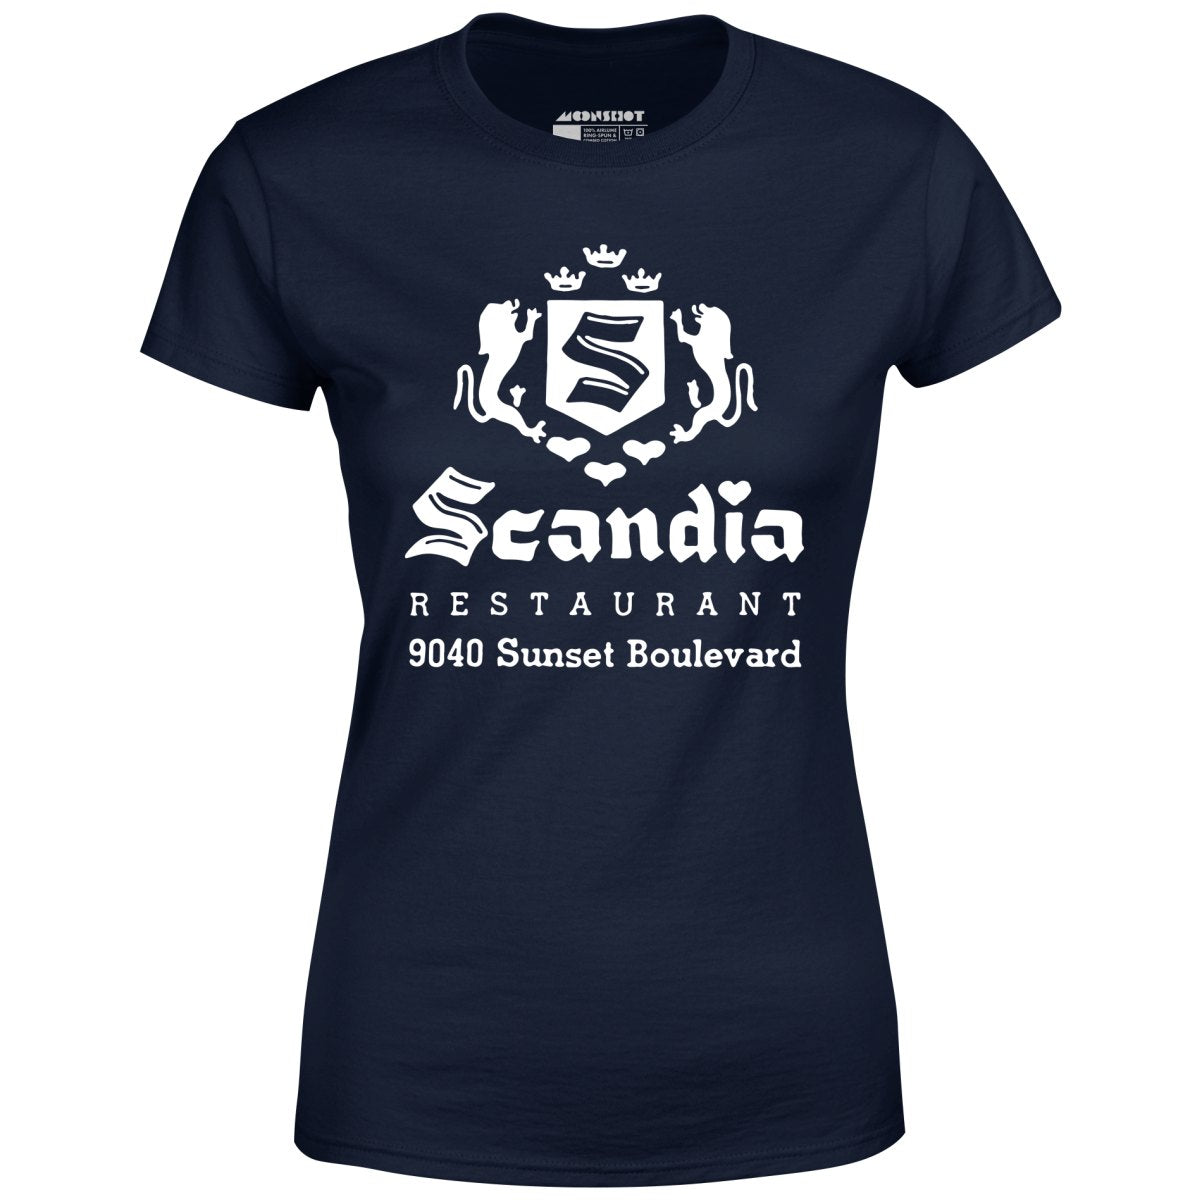 Scandia - West Hollywood, CA - Vintage Restaurant - Women's T-Shirt